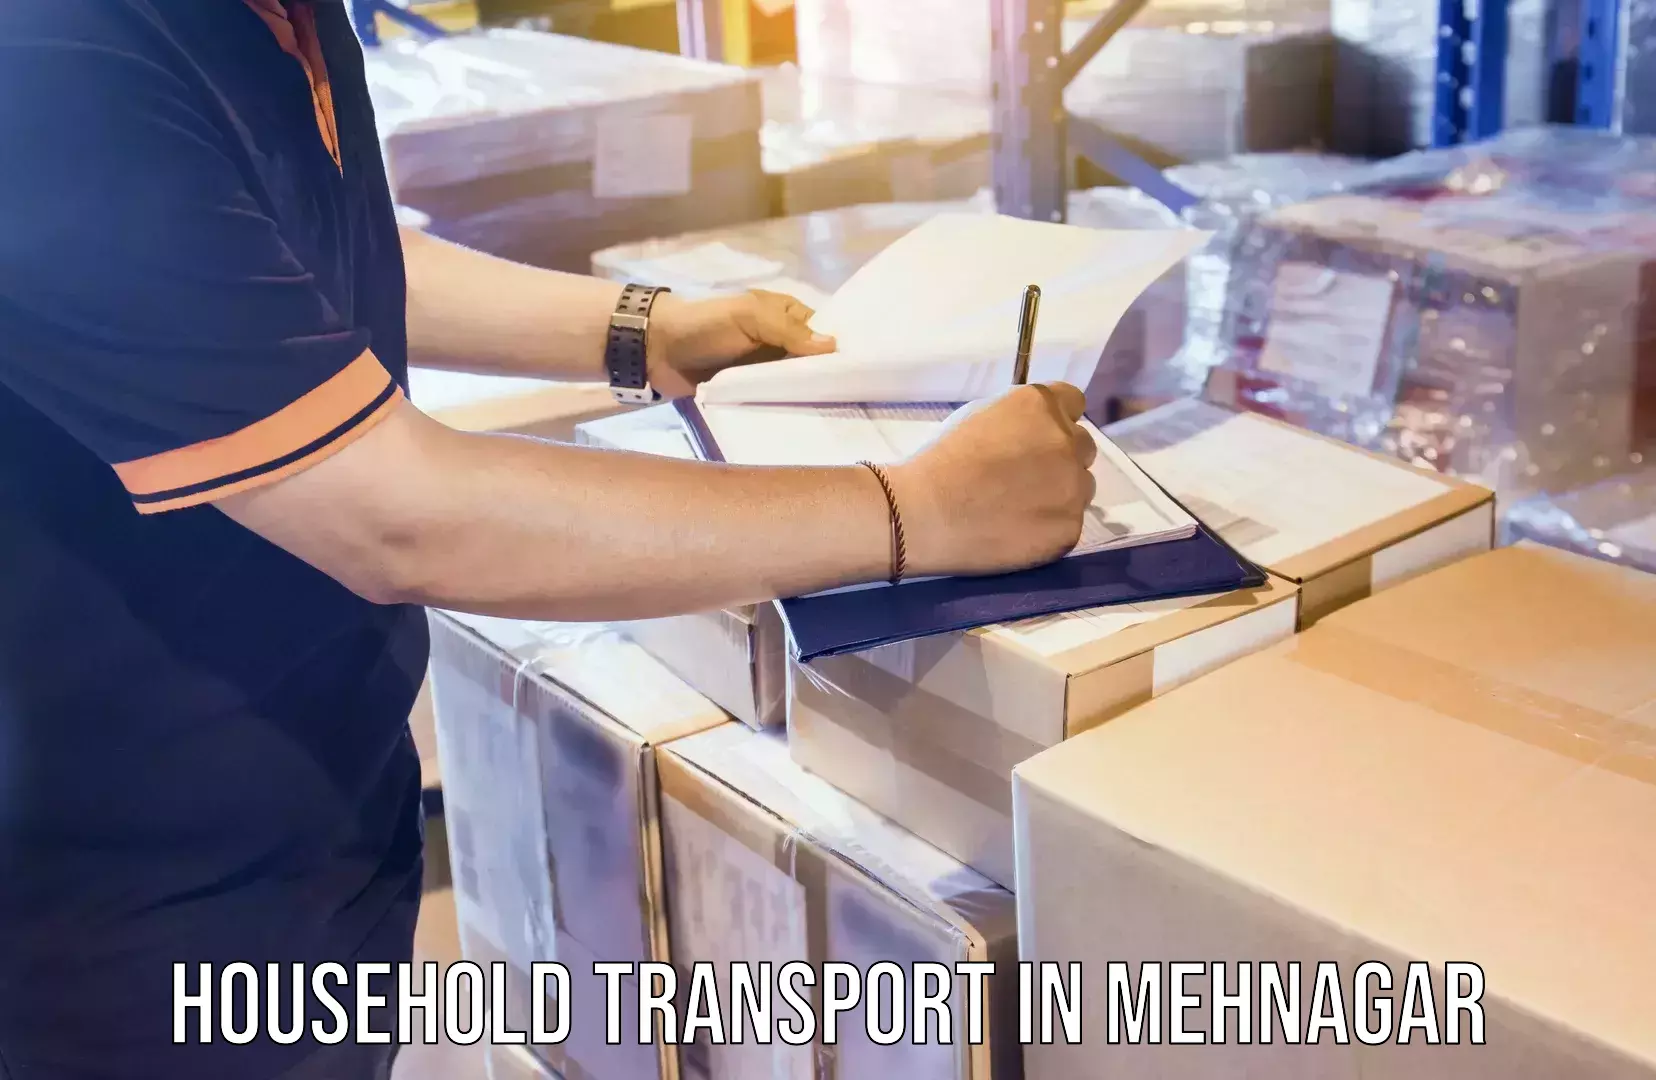 Household goods transport service in Mehnagar